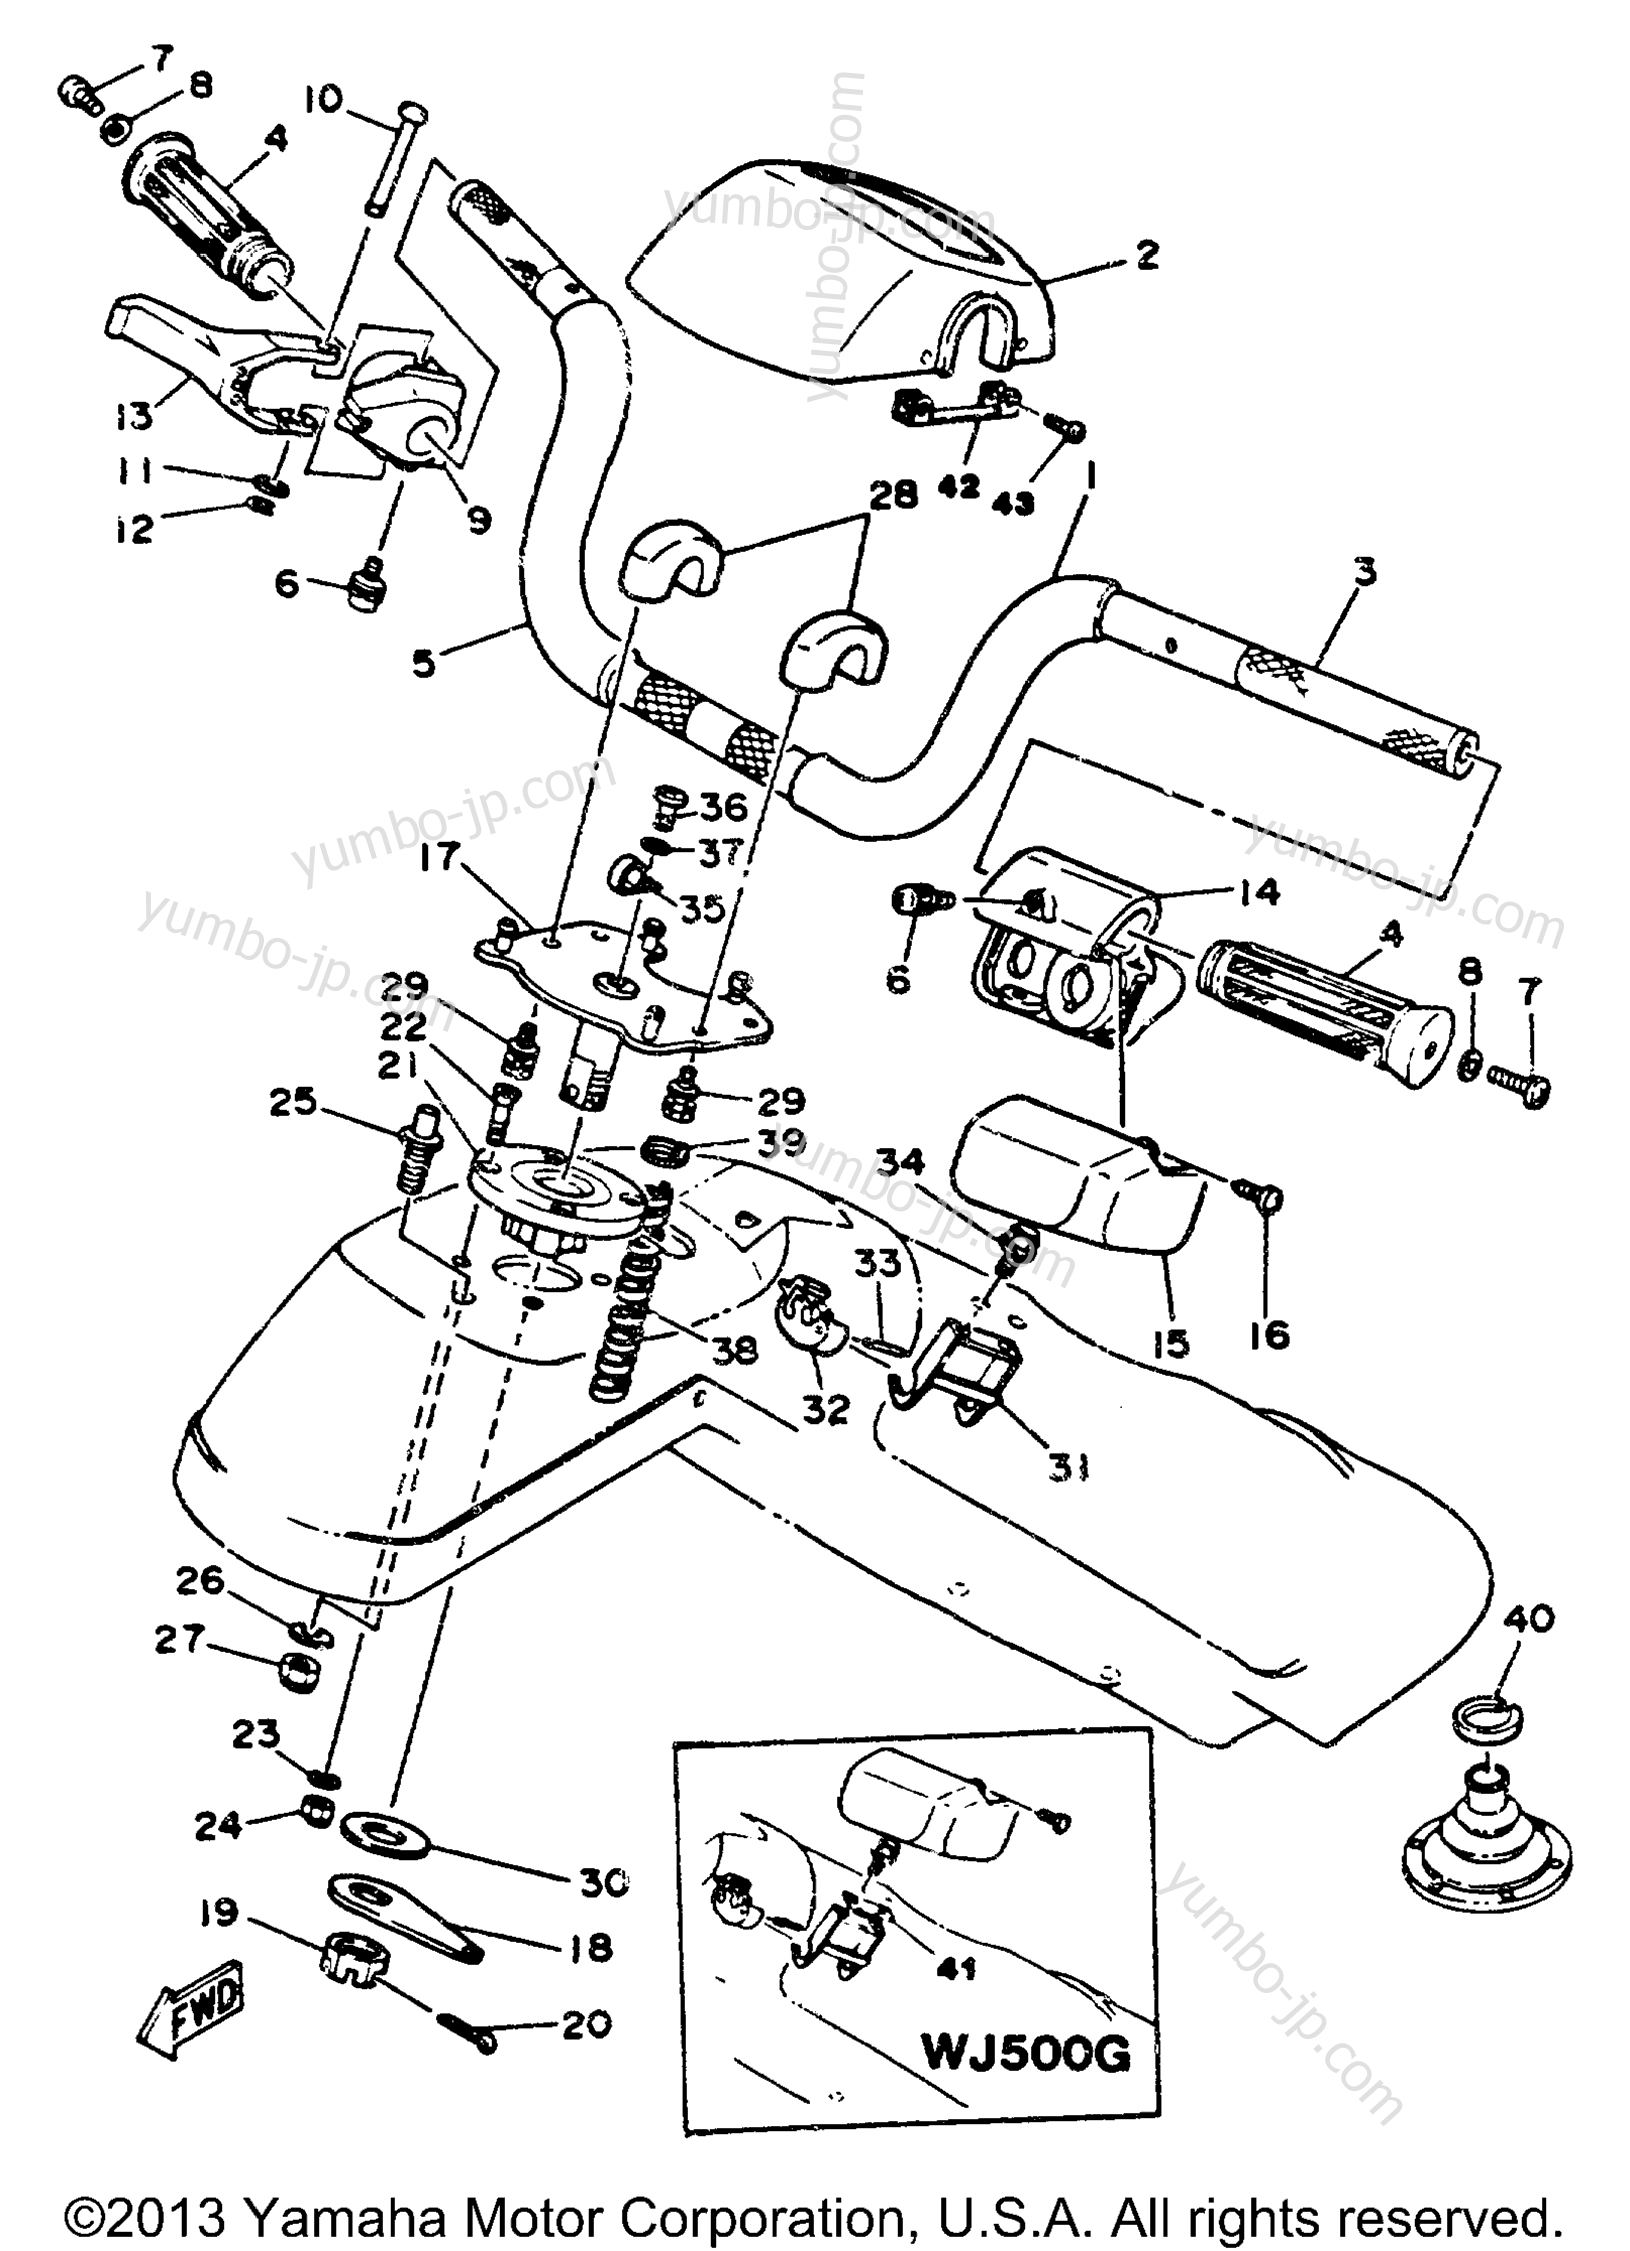 Steering для гидроциклов YAMAHA WAVE JAMMER (WJ500H) 1987 г.